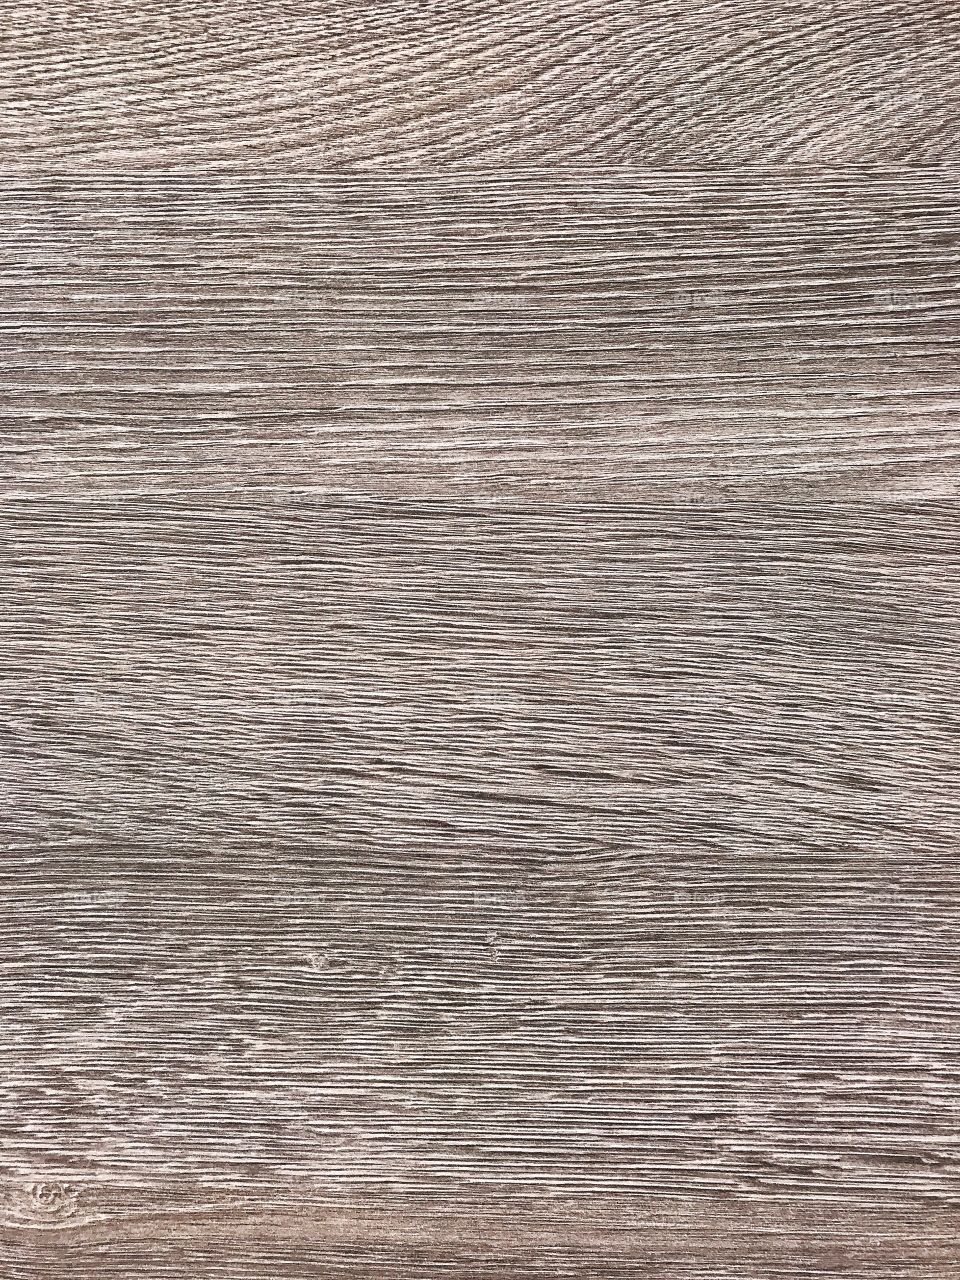 Wooden background/texture